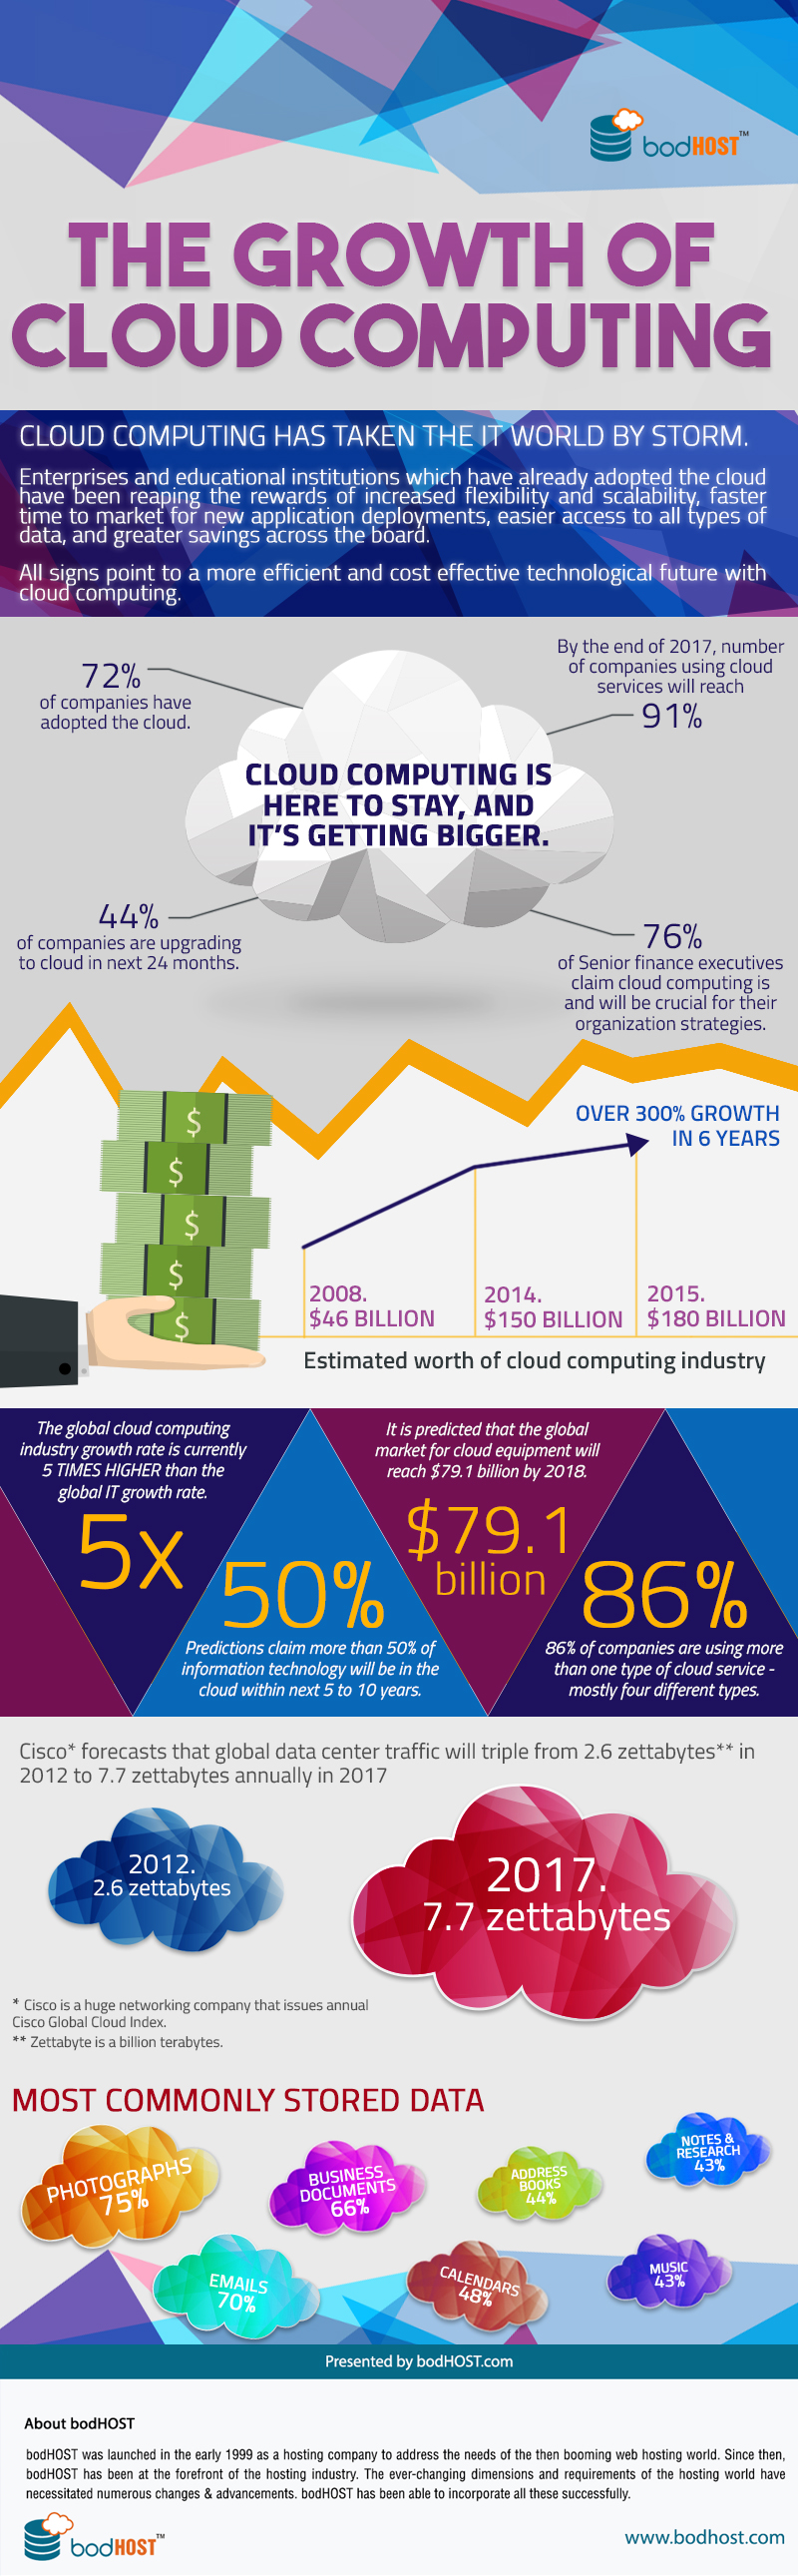 cloud Computing Growth infographic